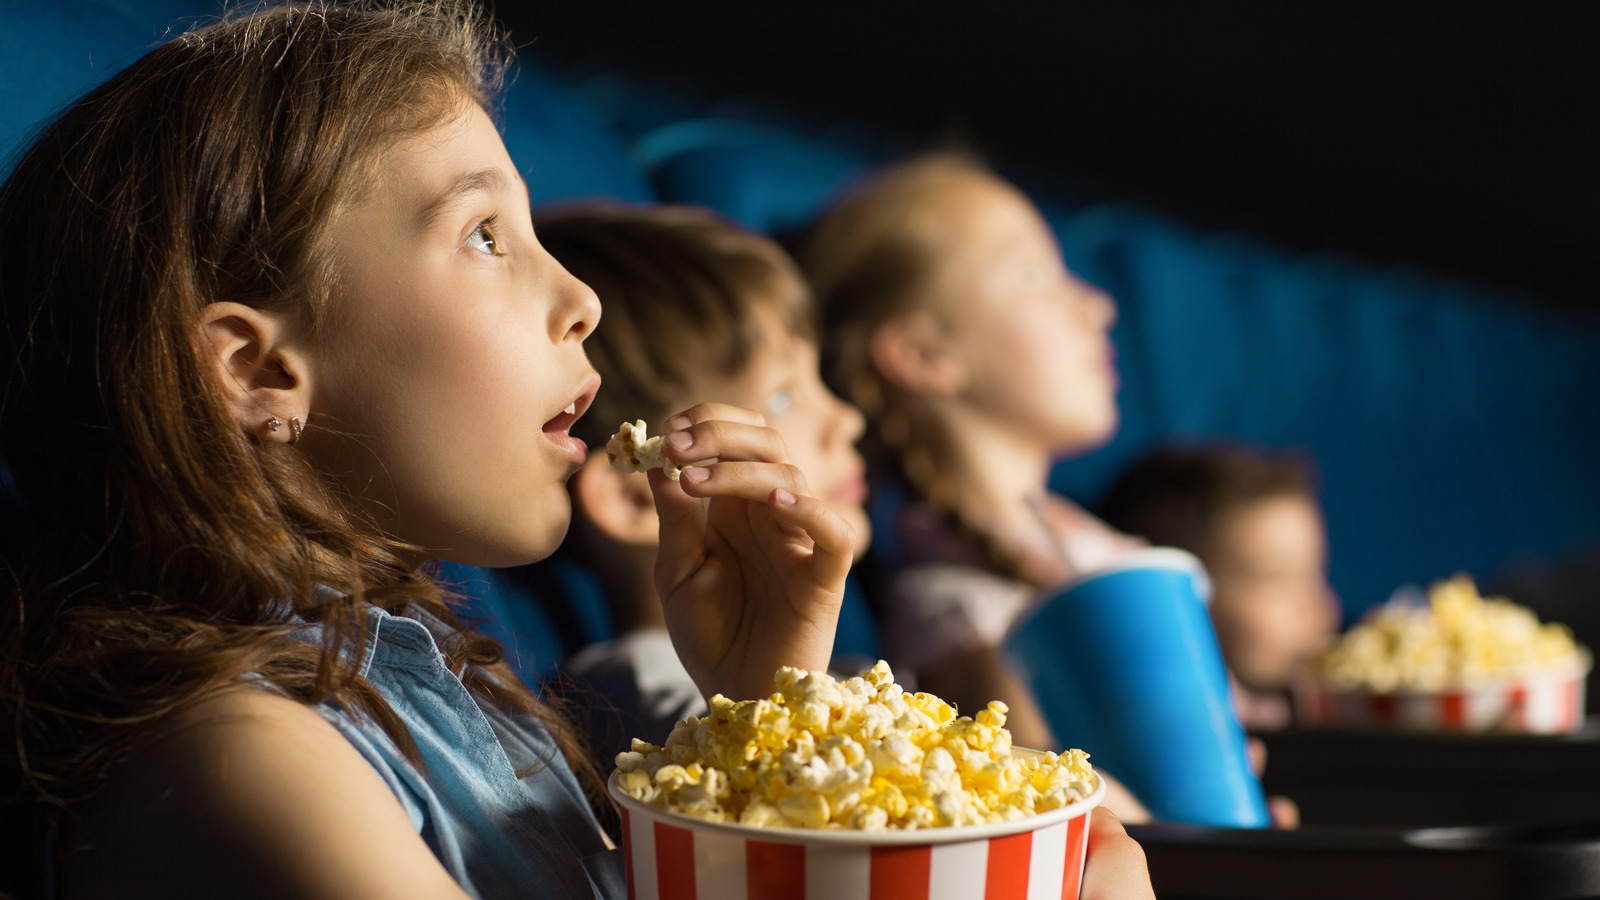 Movie theater and popcorn - vegankse